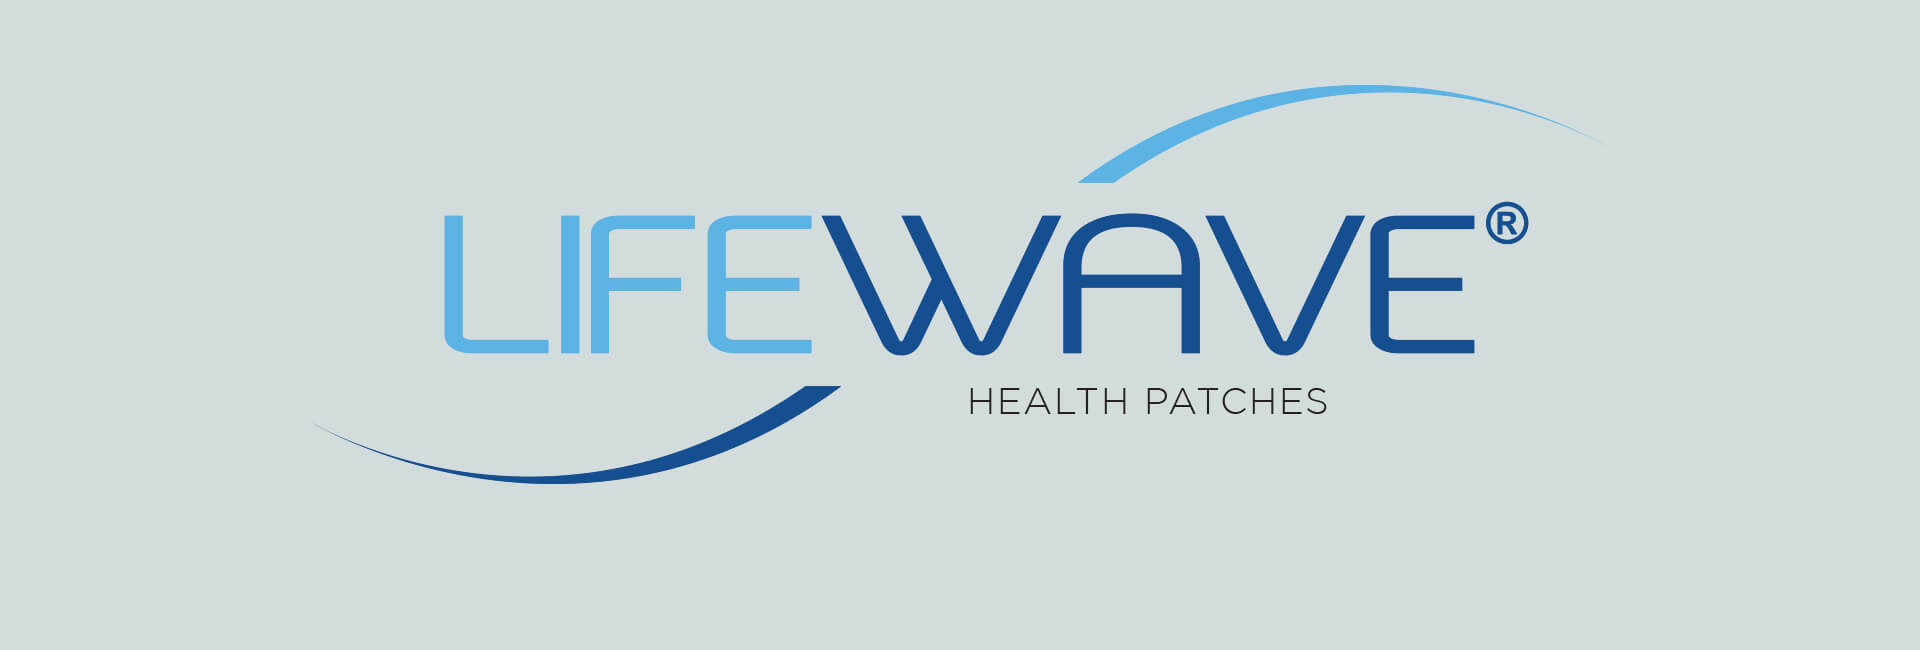 lifewave brand partner healthpatches